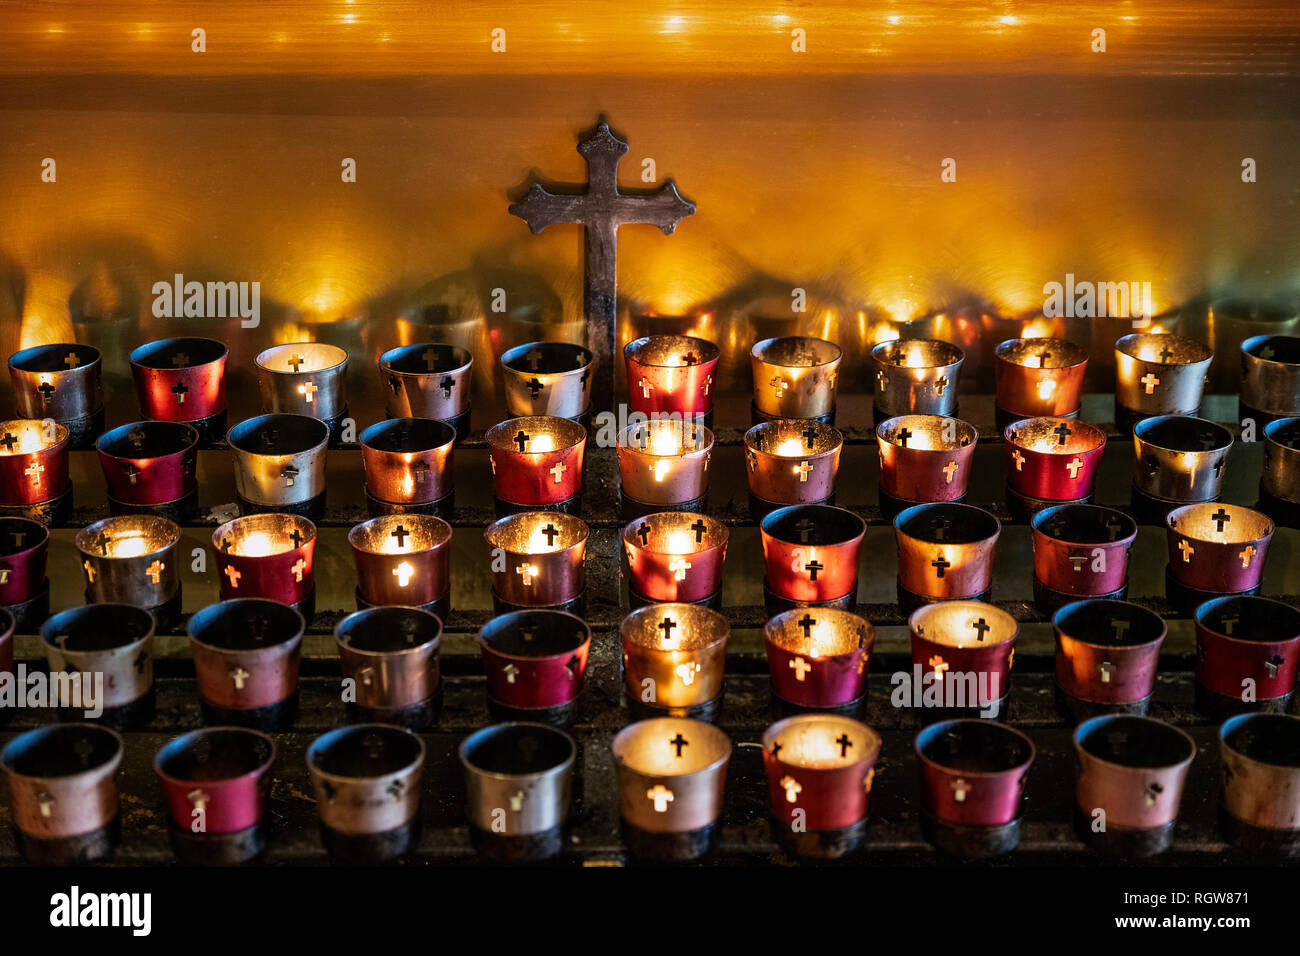 Catholic devotion hi-res stock photography and images - Alamy